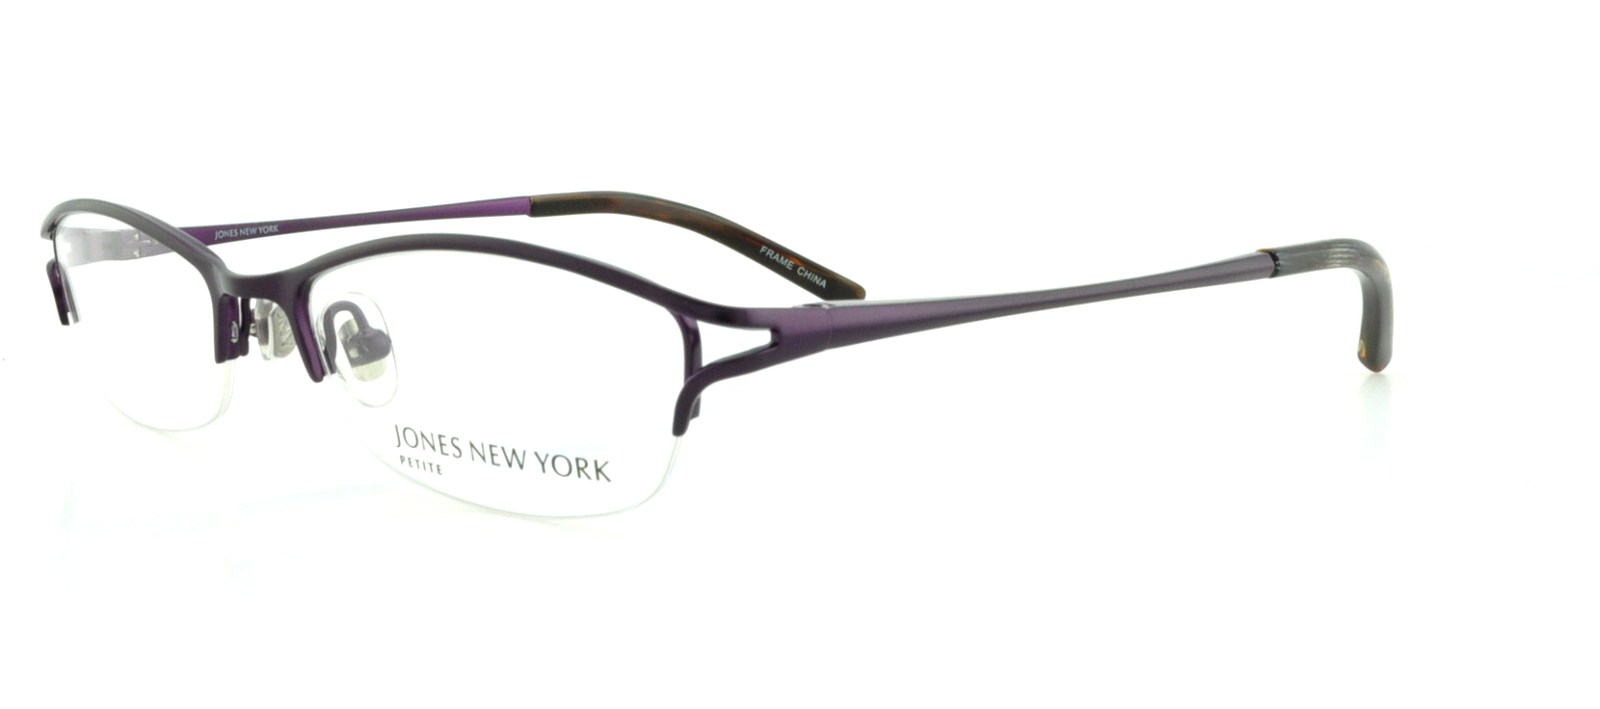 Picture of Jones New York Eyeglasses J129